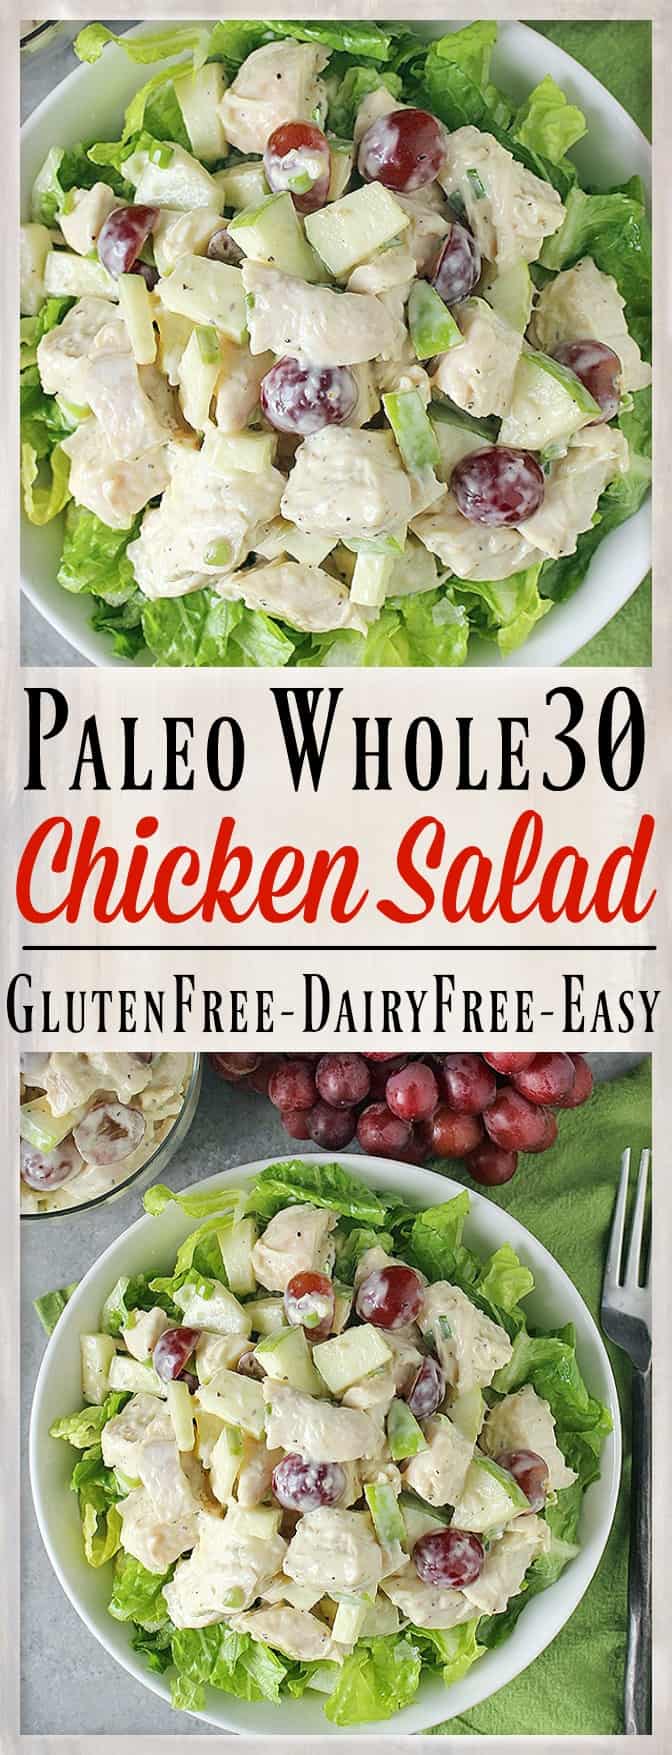 Paleo Whole30 Chicken Salad - Jay's Baking Me Crazy